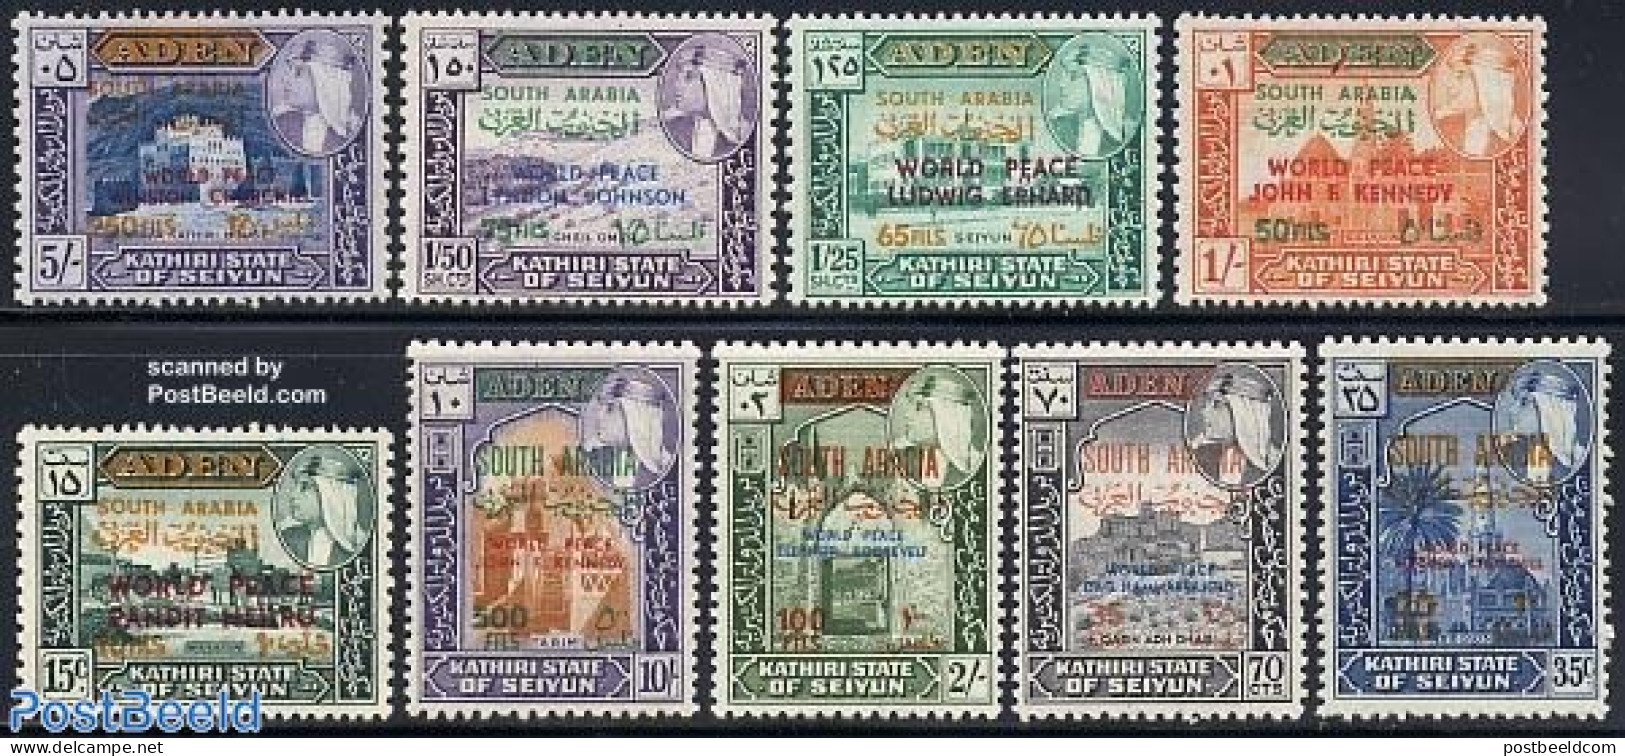 Aden 1967 Seiyun, World Peace Overprints 9v, Mint NH, Art - Castles & Fortifications - Castelli